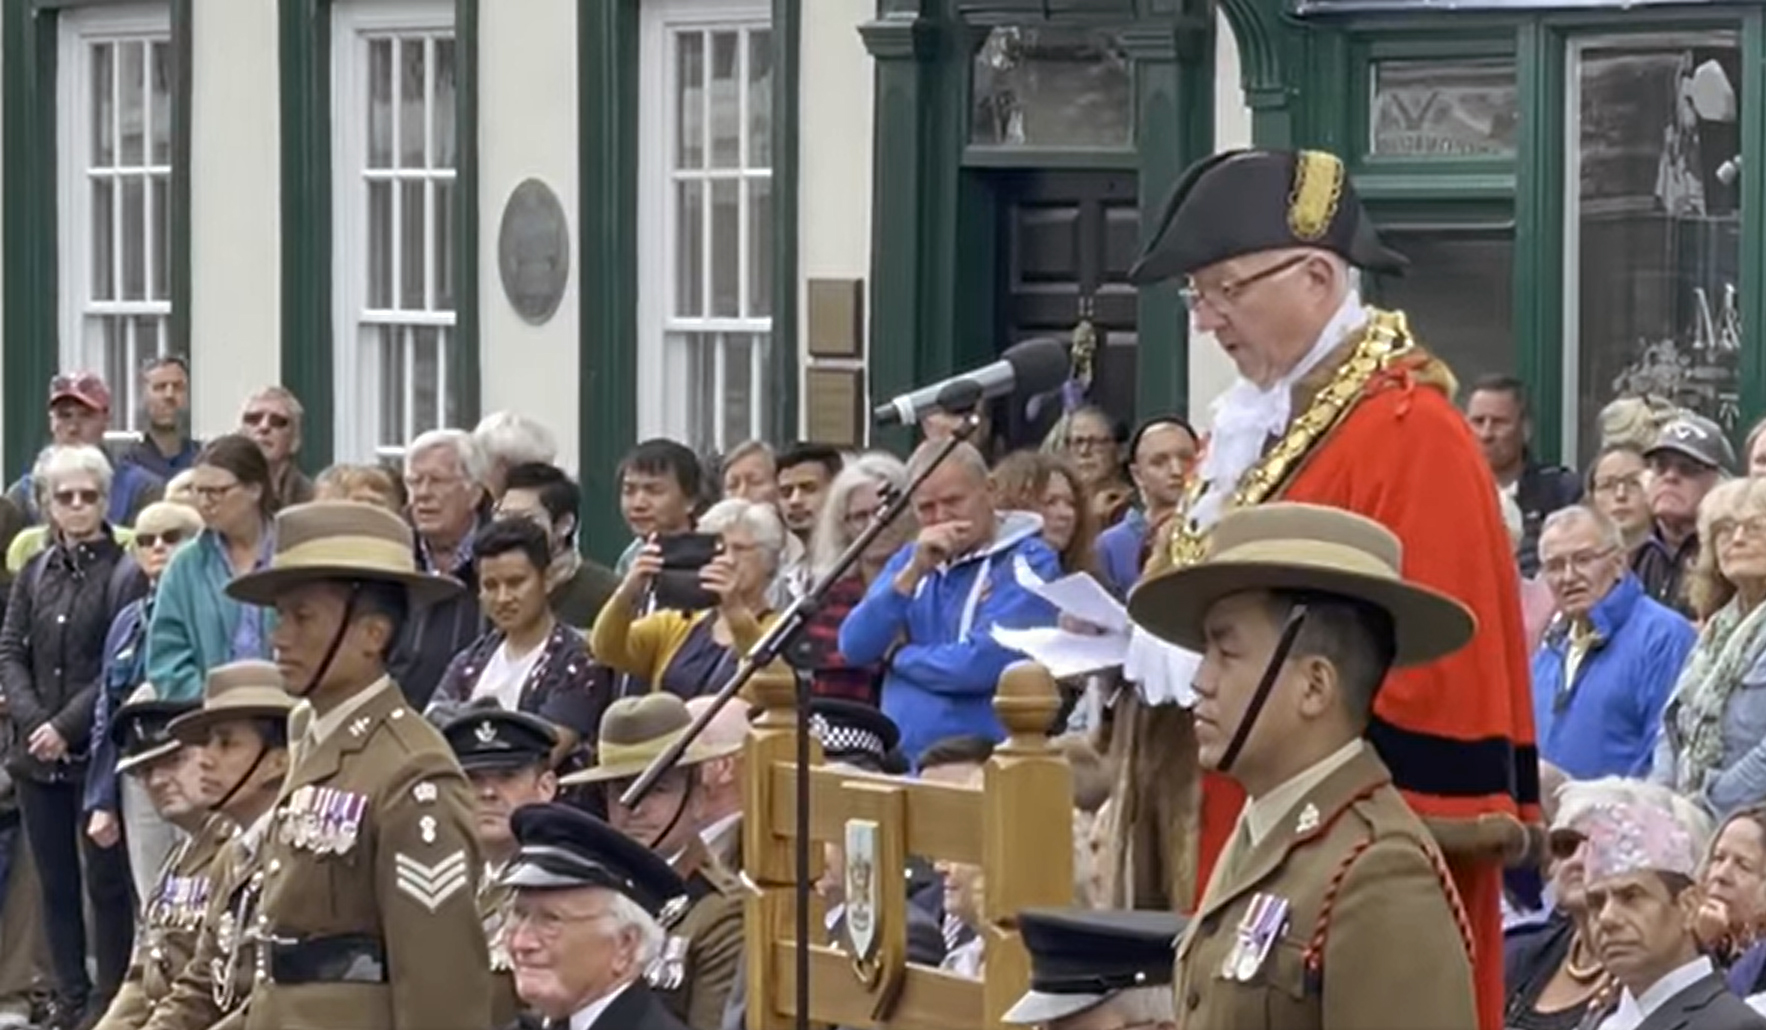 Brecon's Mayor addresses the Gurkha Mandalay Wing regiment in Brecon